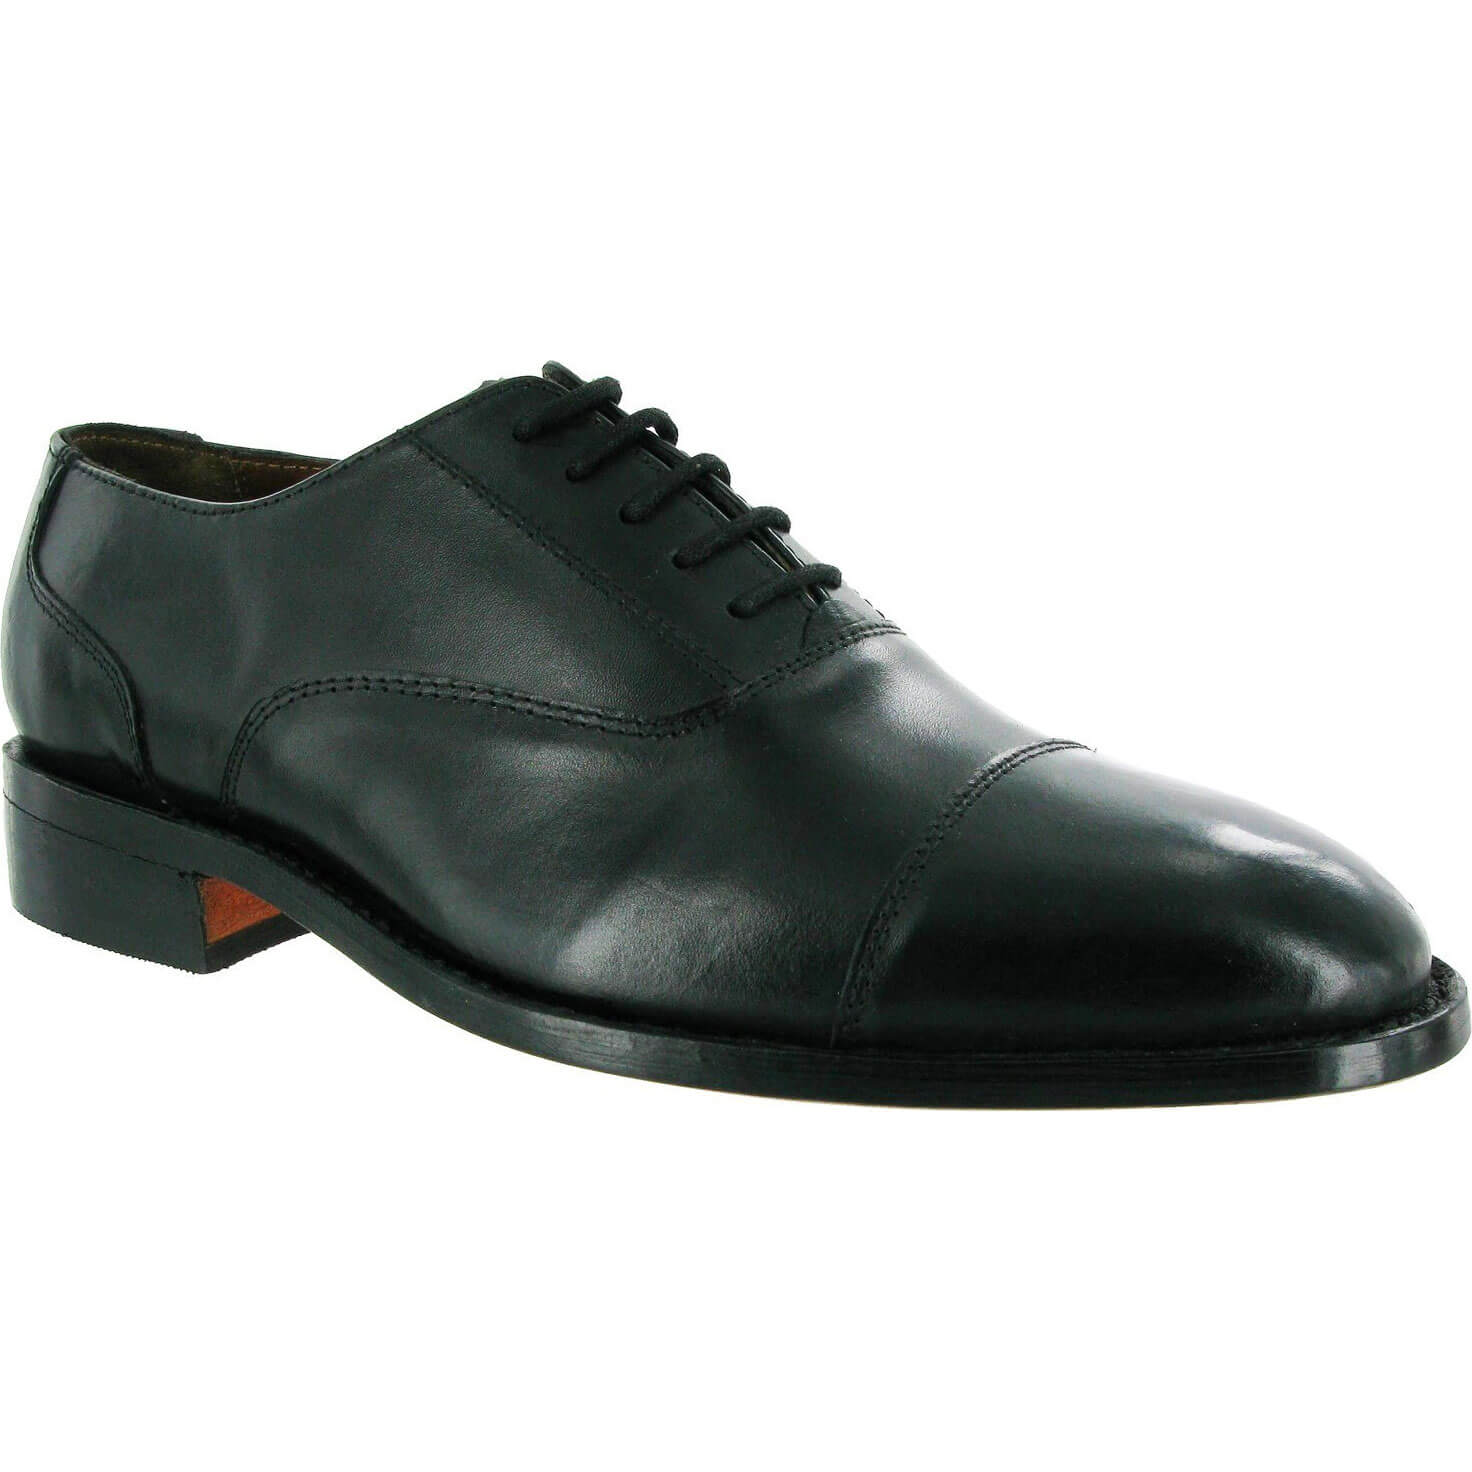 Image of Amblers James Leather Soled Oxford Dress Shoe Black Size 8.5